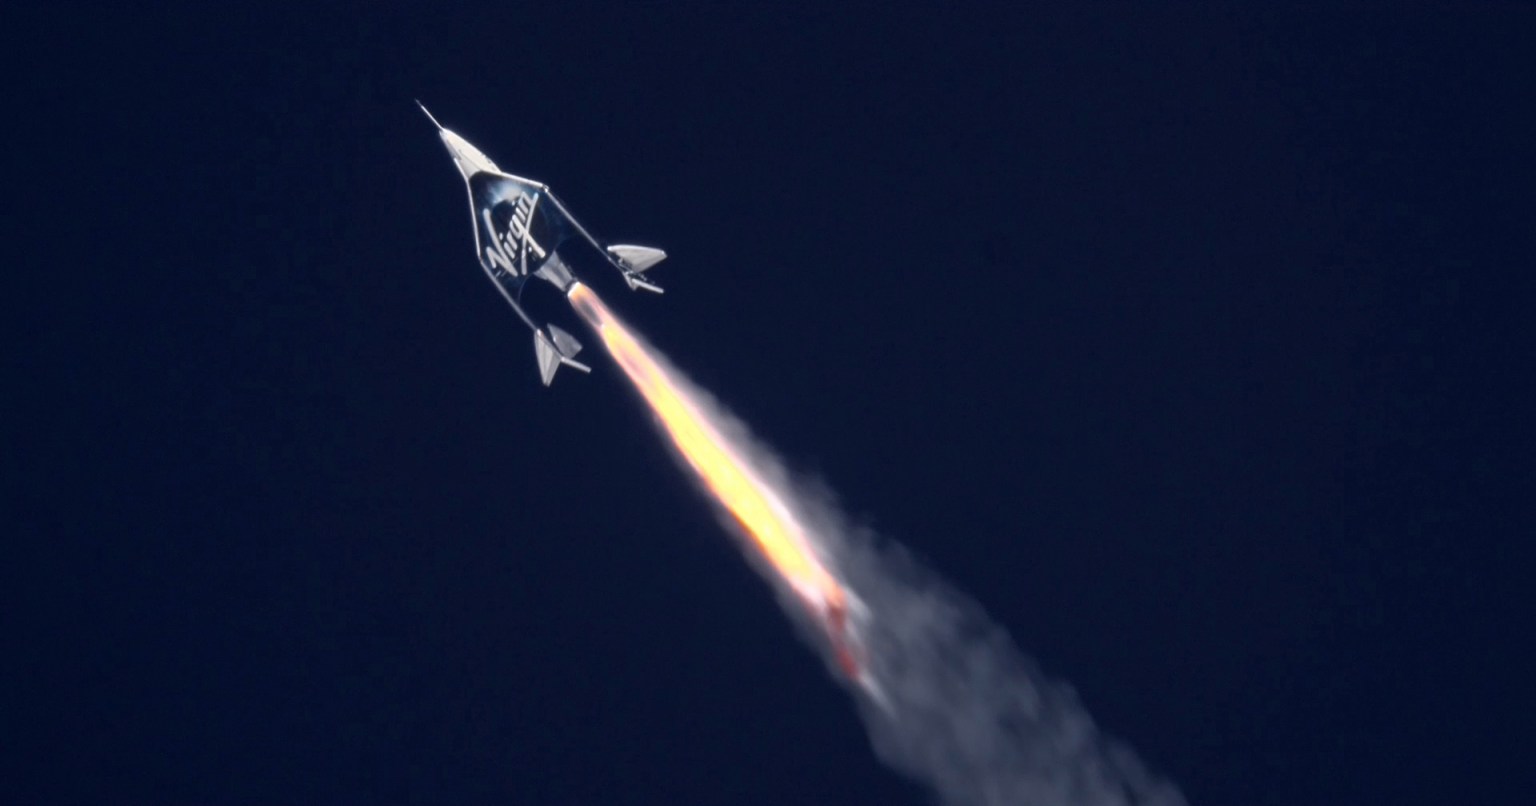 Spacecraft with "Virgin" written on the side rocketing through a deep blue sky